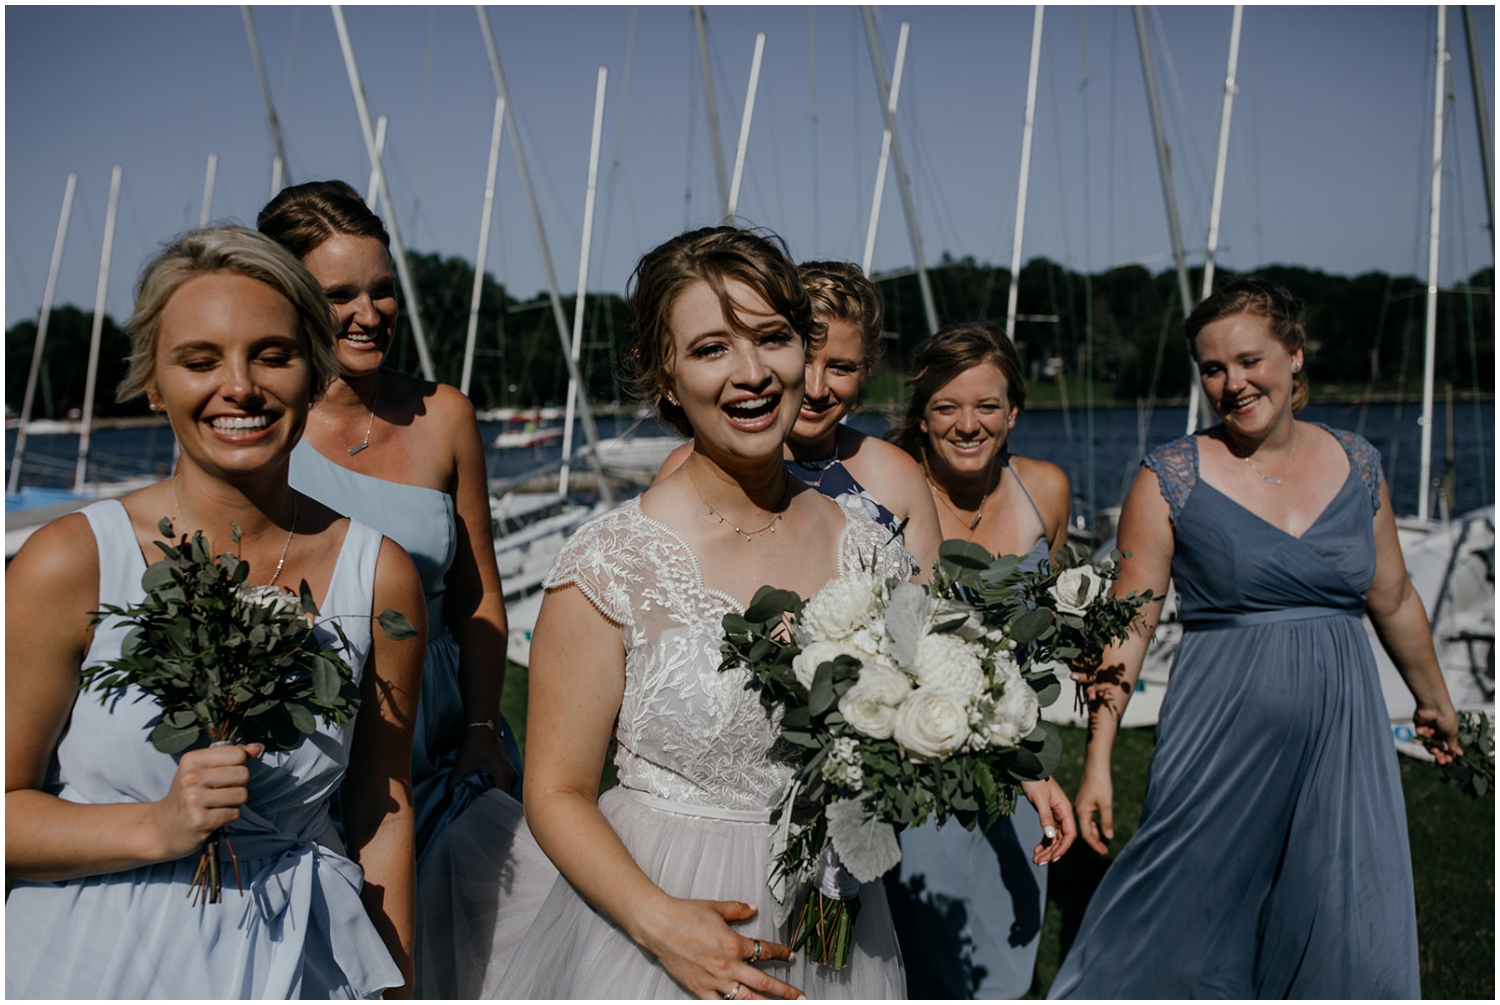 Savannah + Charlie's Minnetonka Yacht Club Wedding — Rosetree Events